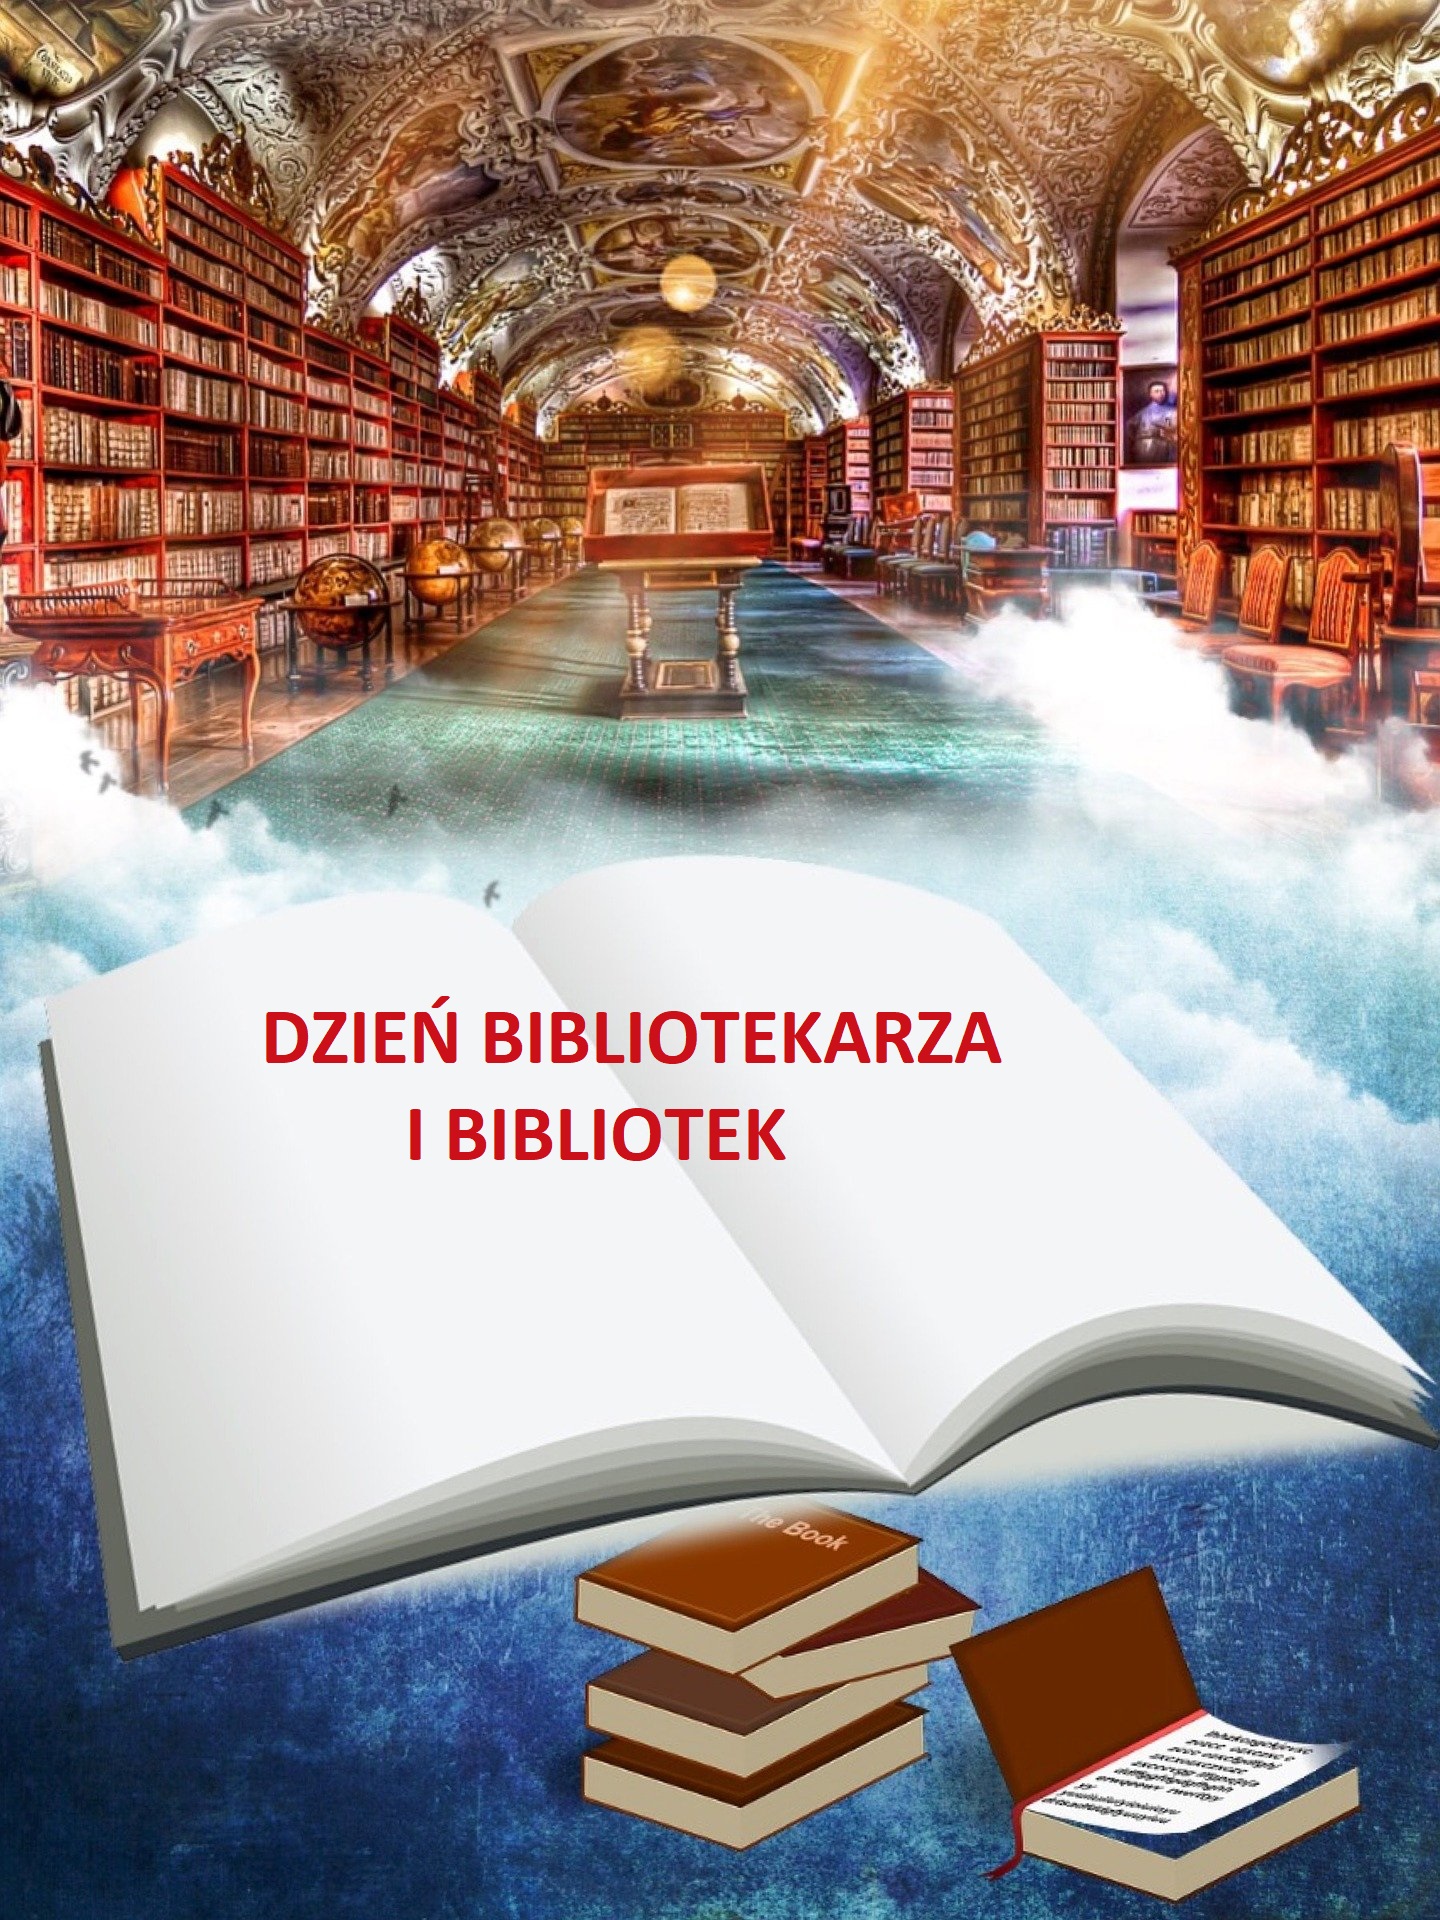 You are currently viewing Tydzień Bibliotek